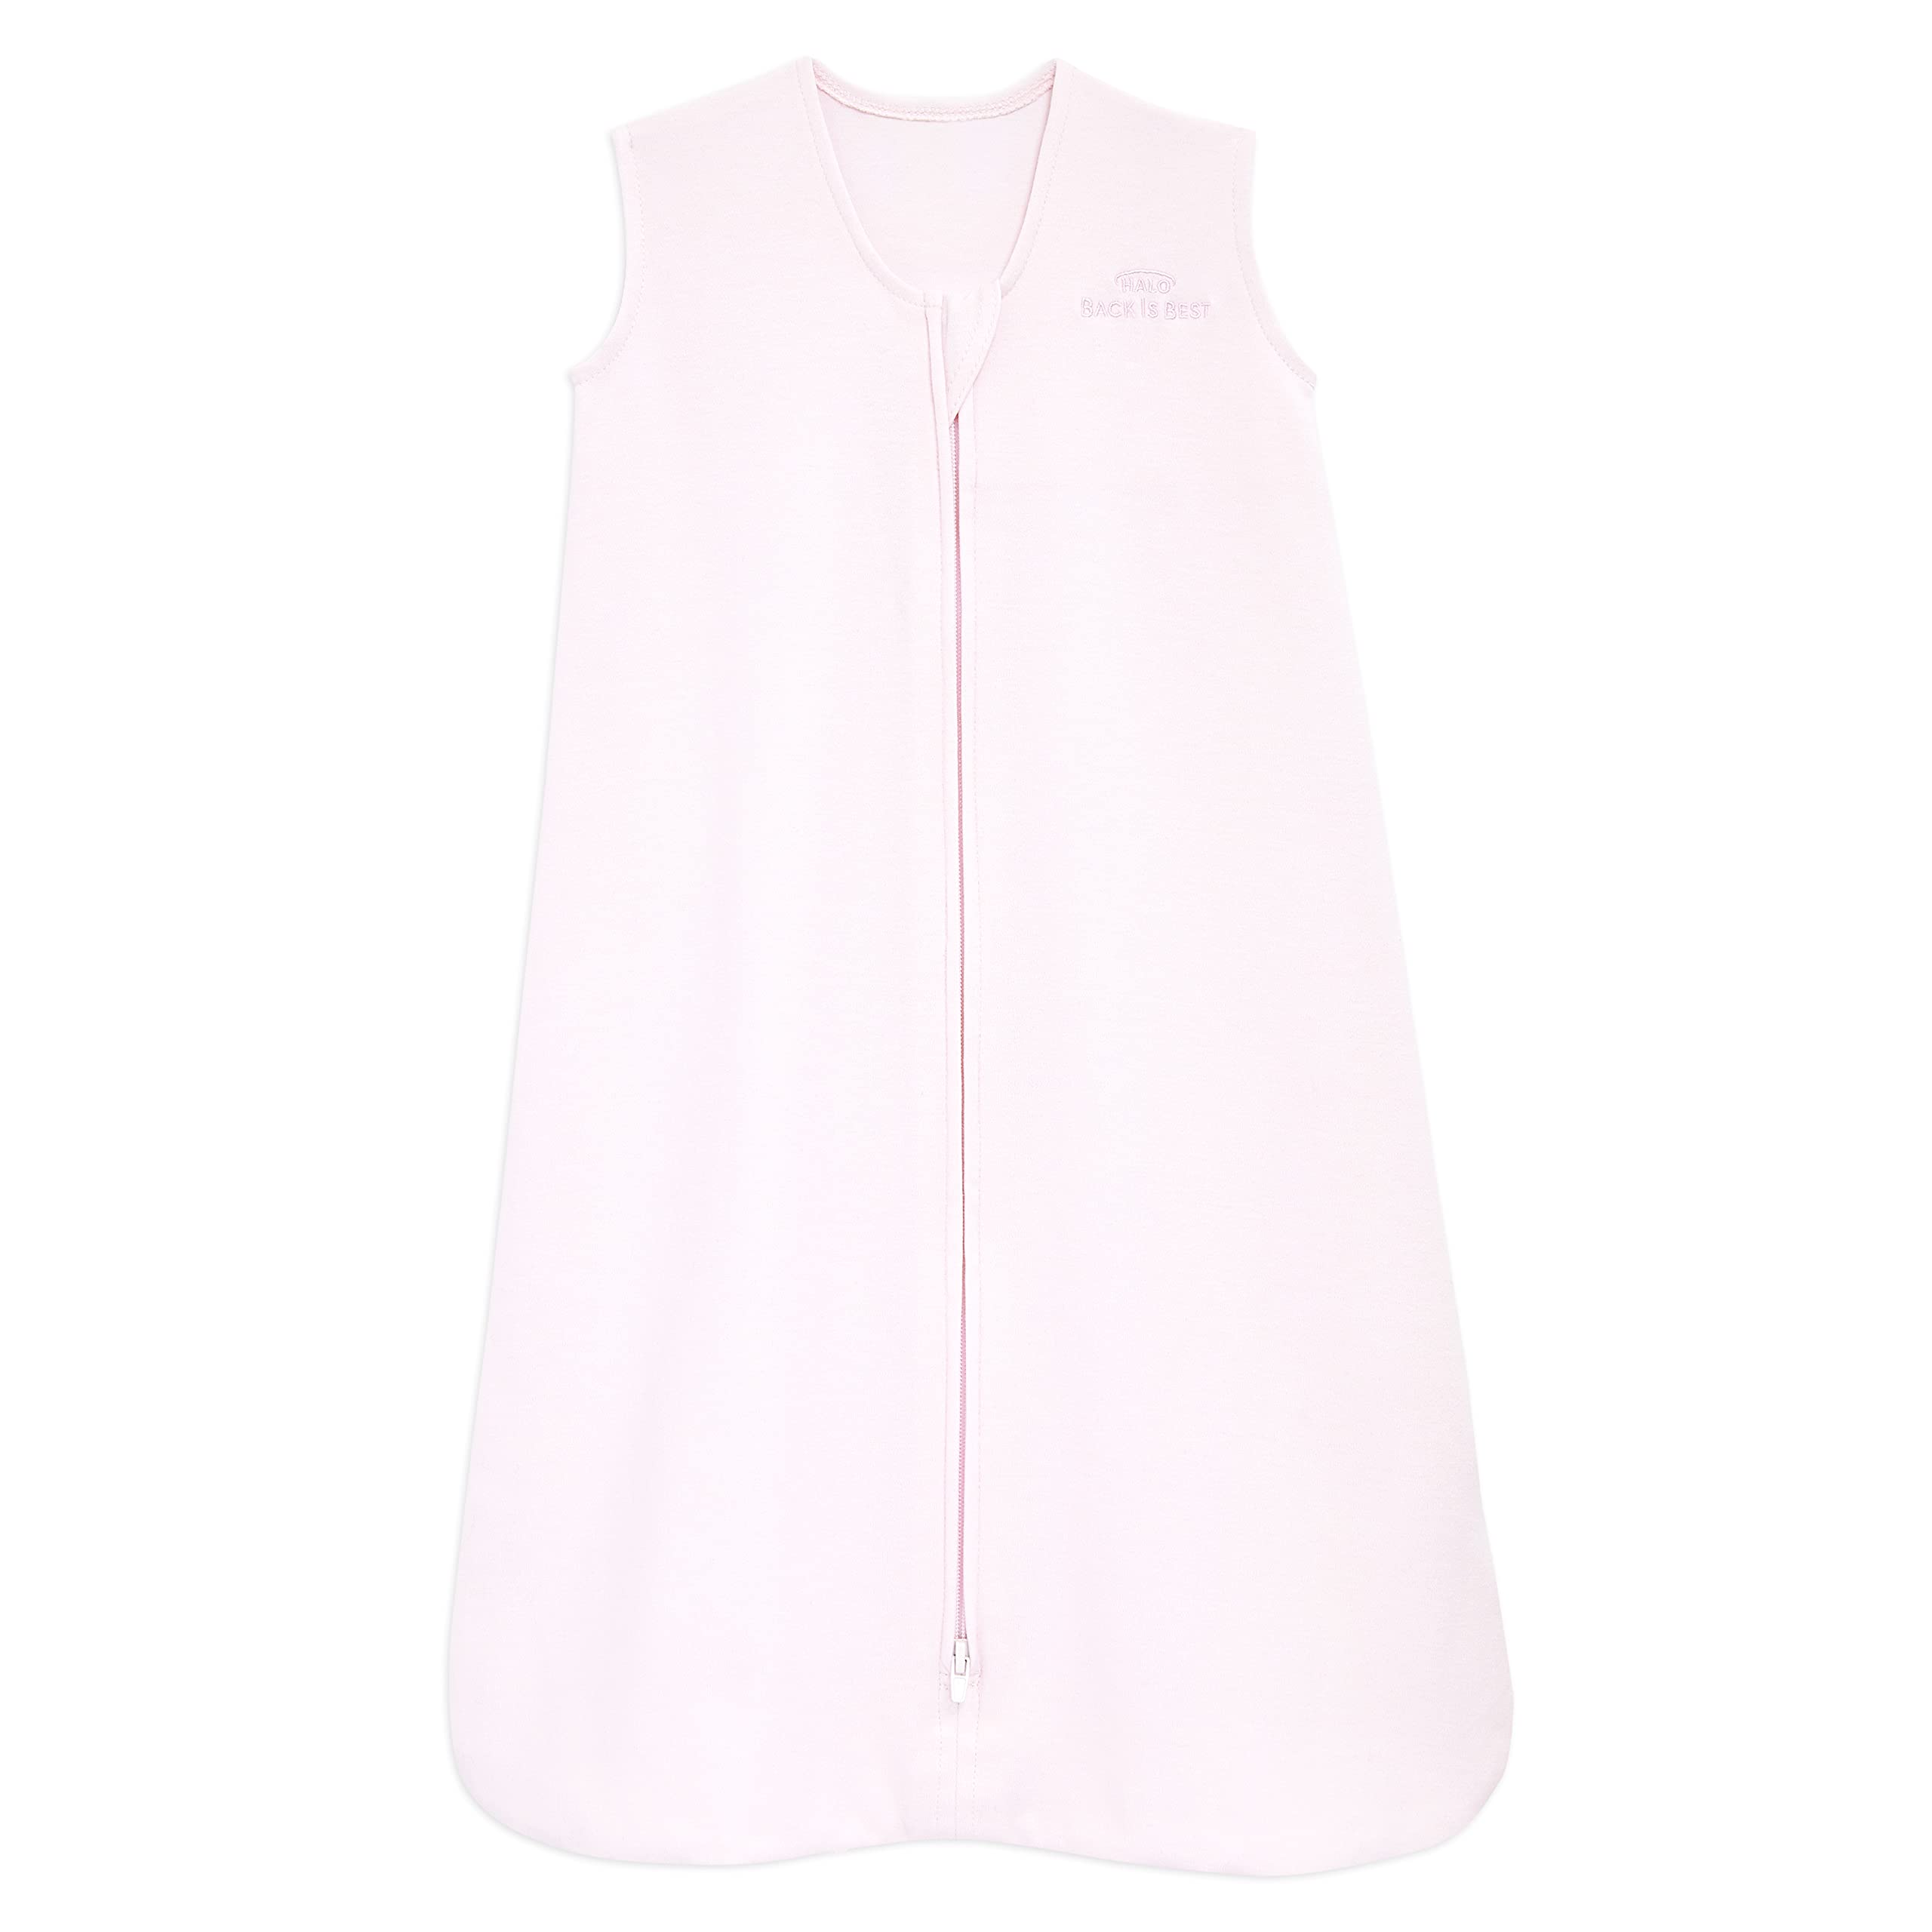 HALO Sleepsack, 100% Cotton Wearable Blanket, Swaddle Transition Sleeping Bag, TOG 0.5, Soft Pink, X-Large, 18-24 Months